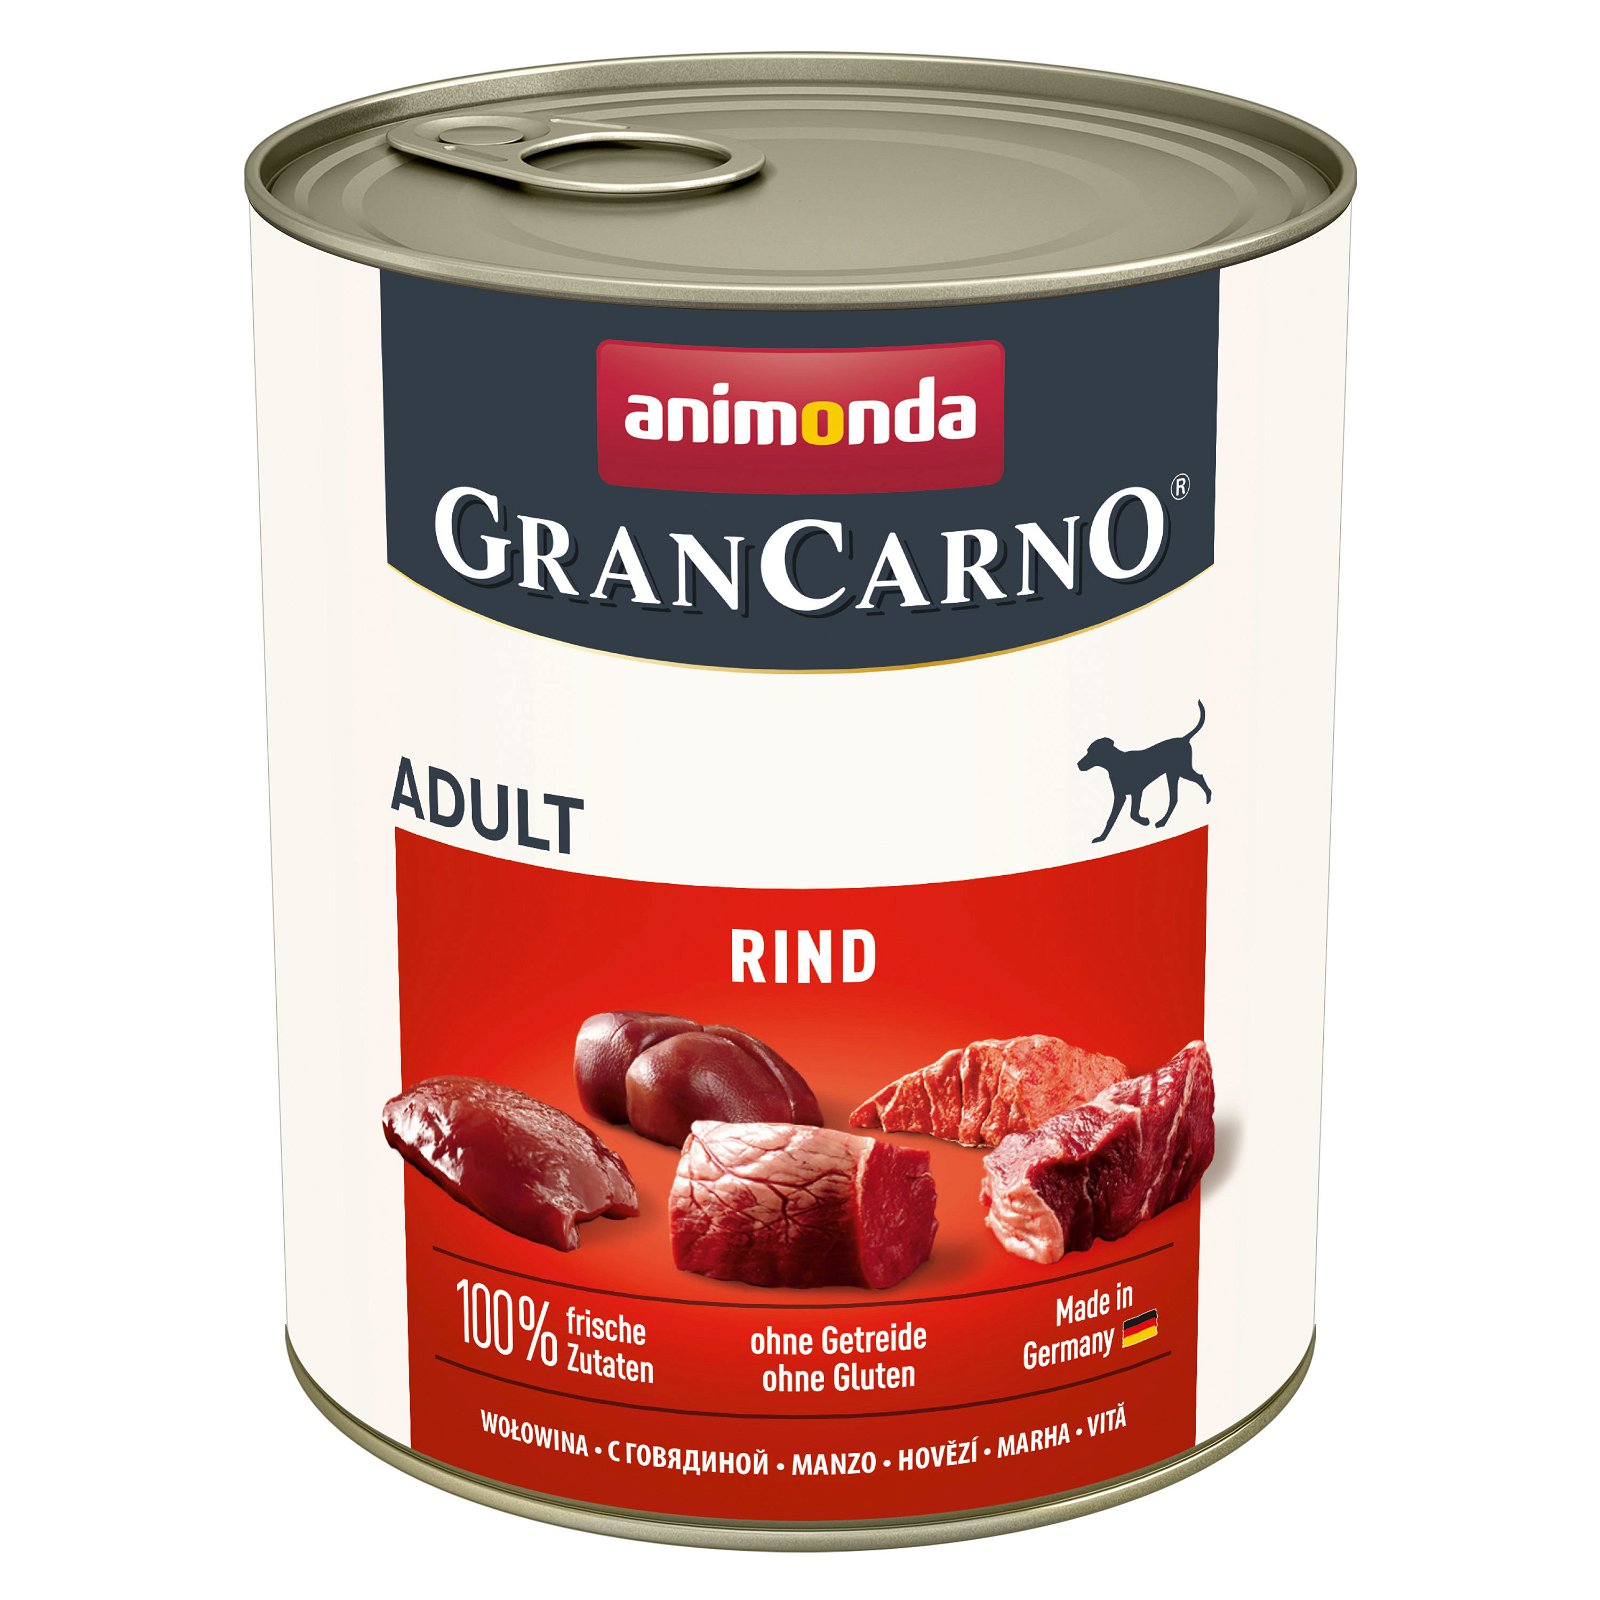 Hundefutter 'Animonda Cran Carno ® Adult', Rindfleisch pur